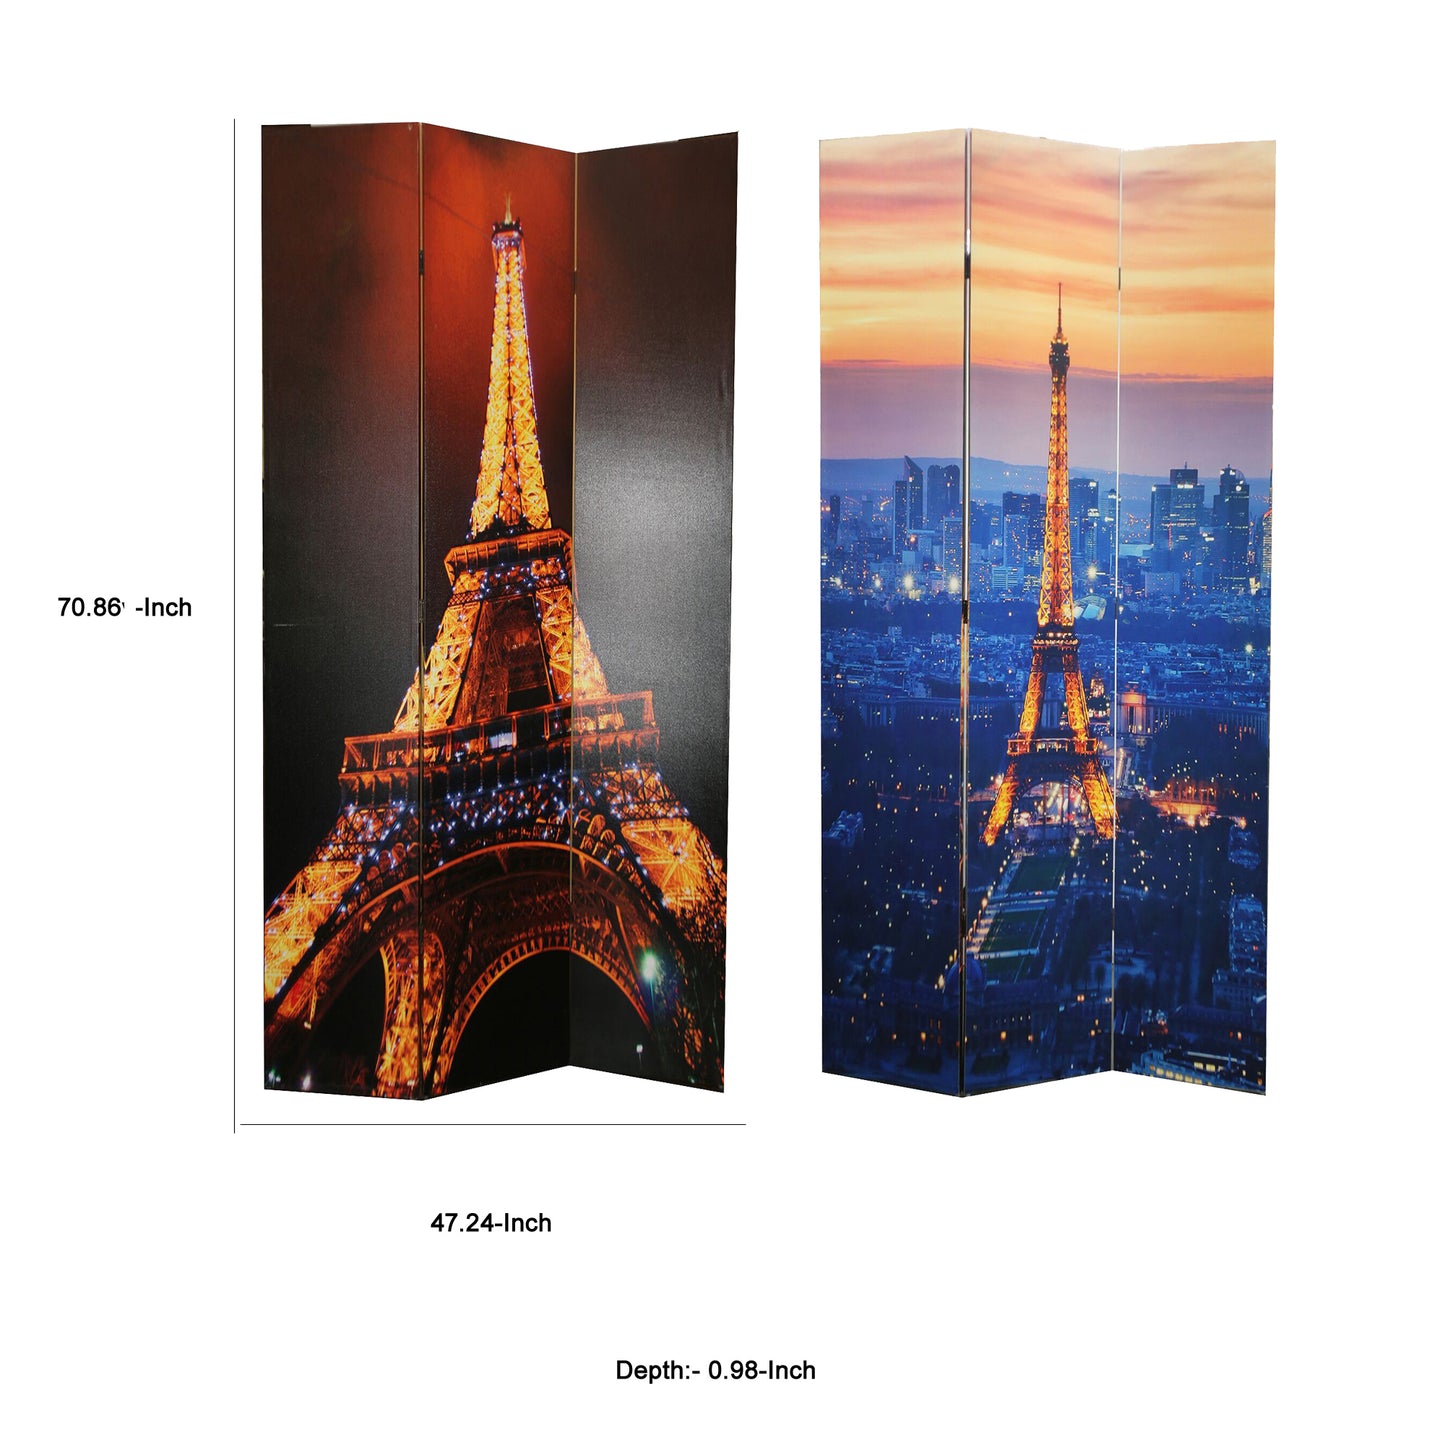 71 Inch 3 Panel Room Divider, EIFFEL TOWER Digital Print, Multicolor